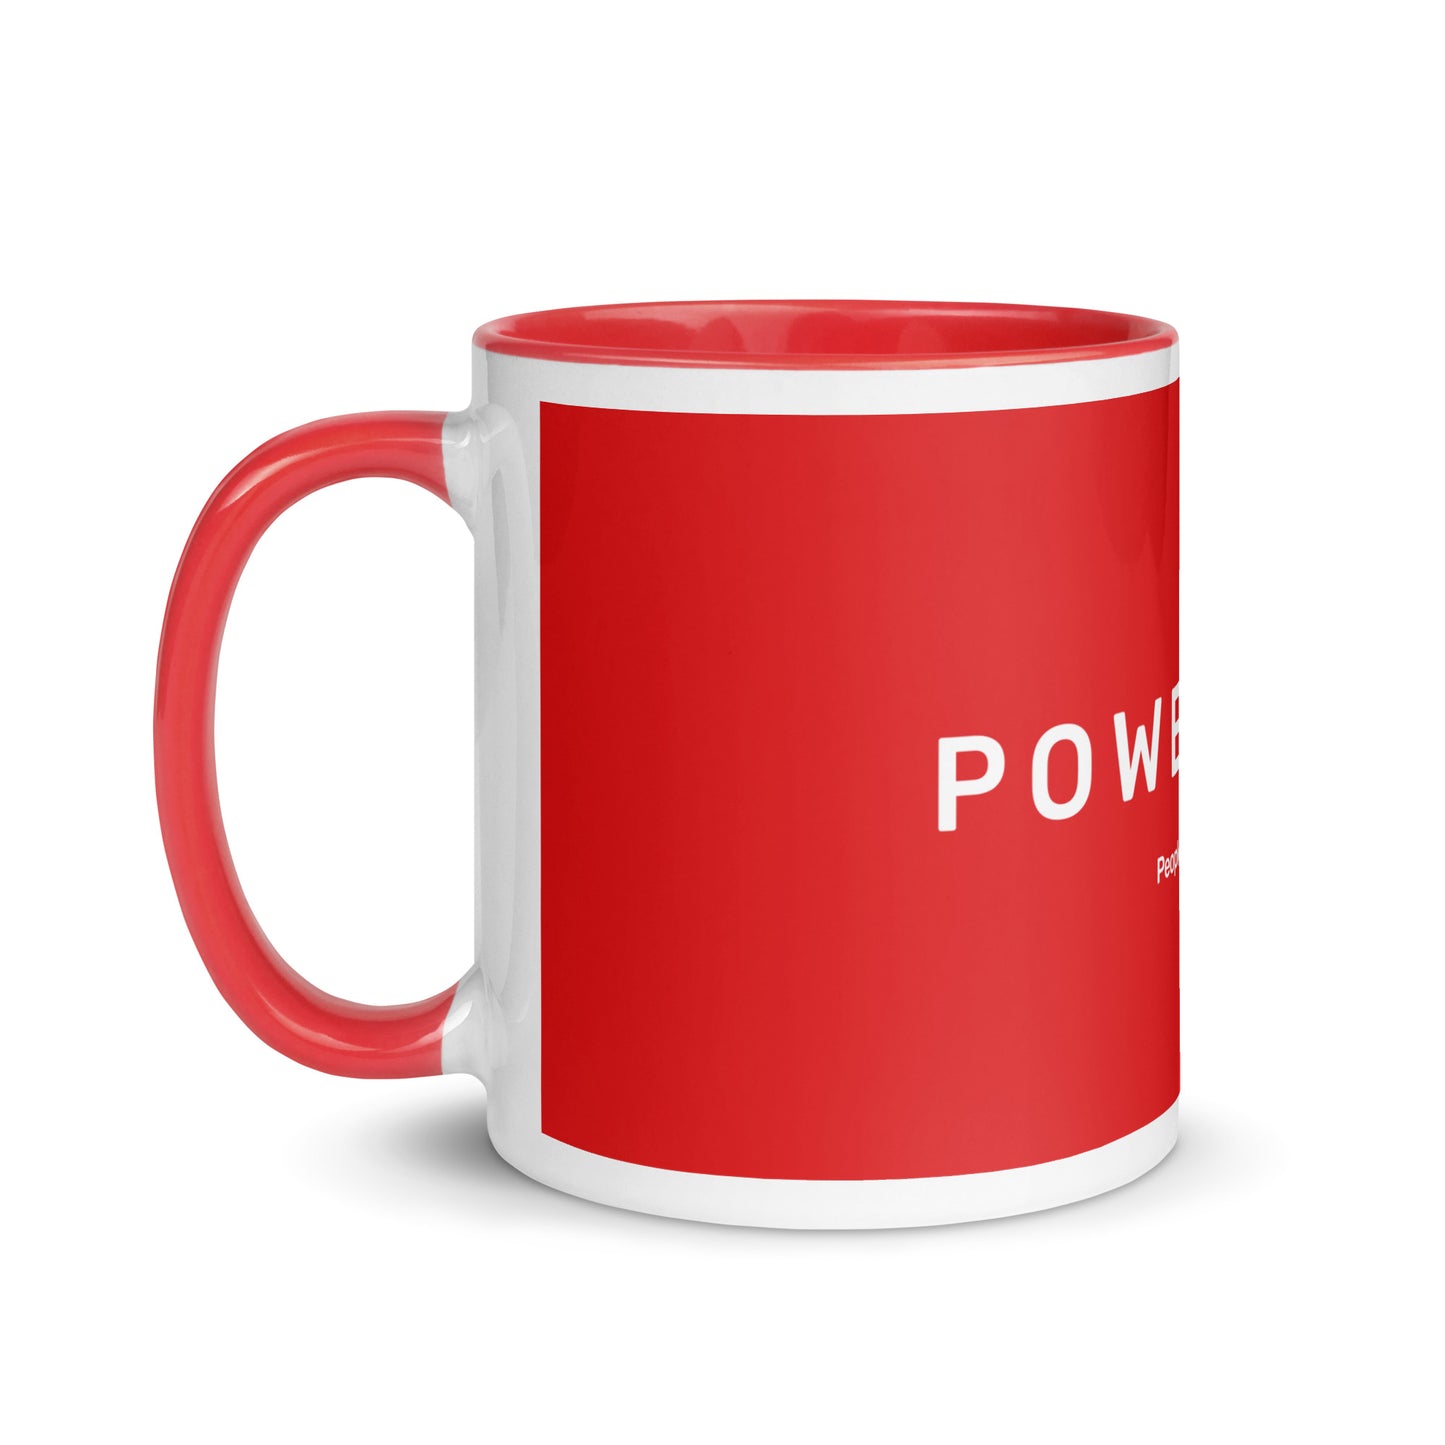 Peoplepreneur® - Mindset Mugs [POWERFUL]